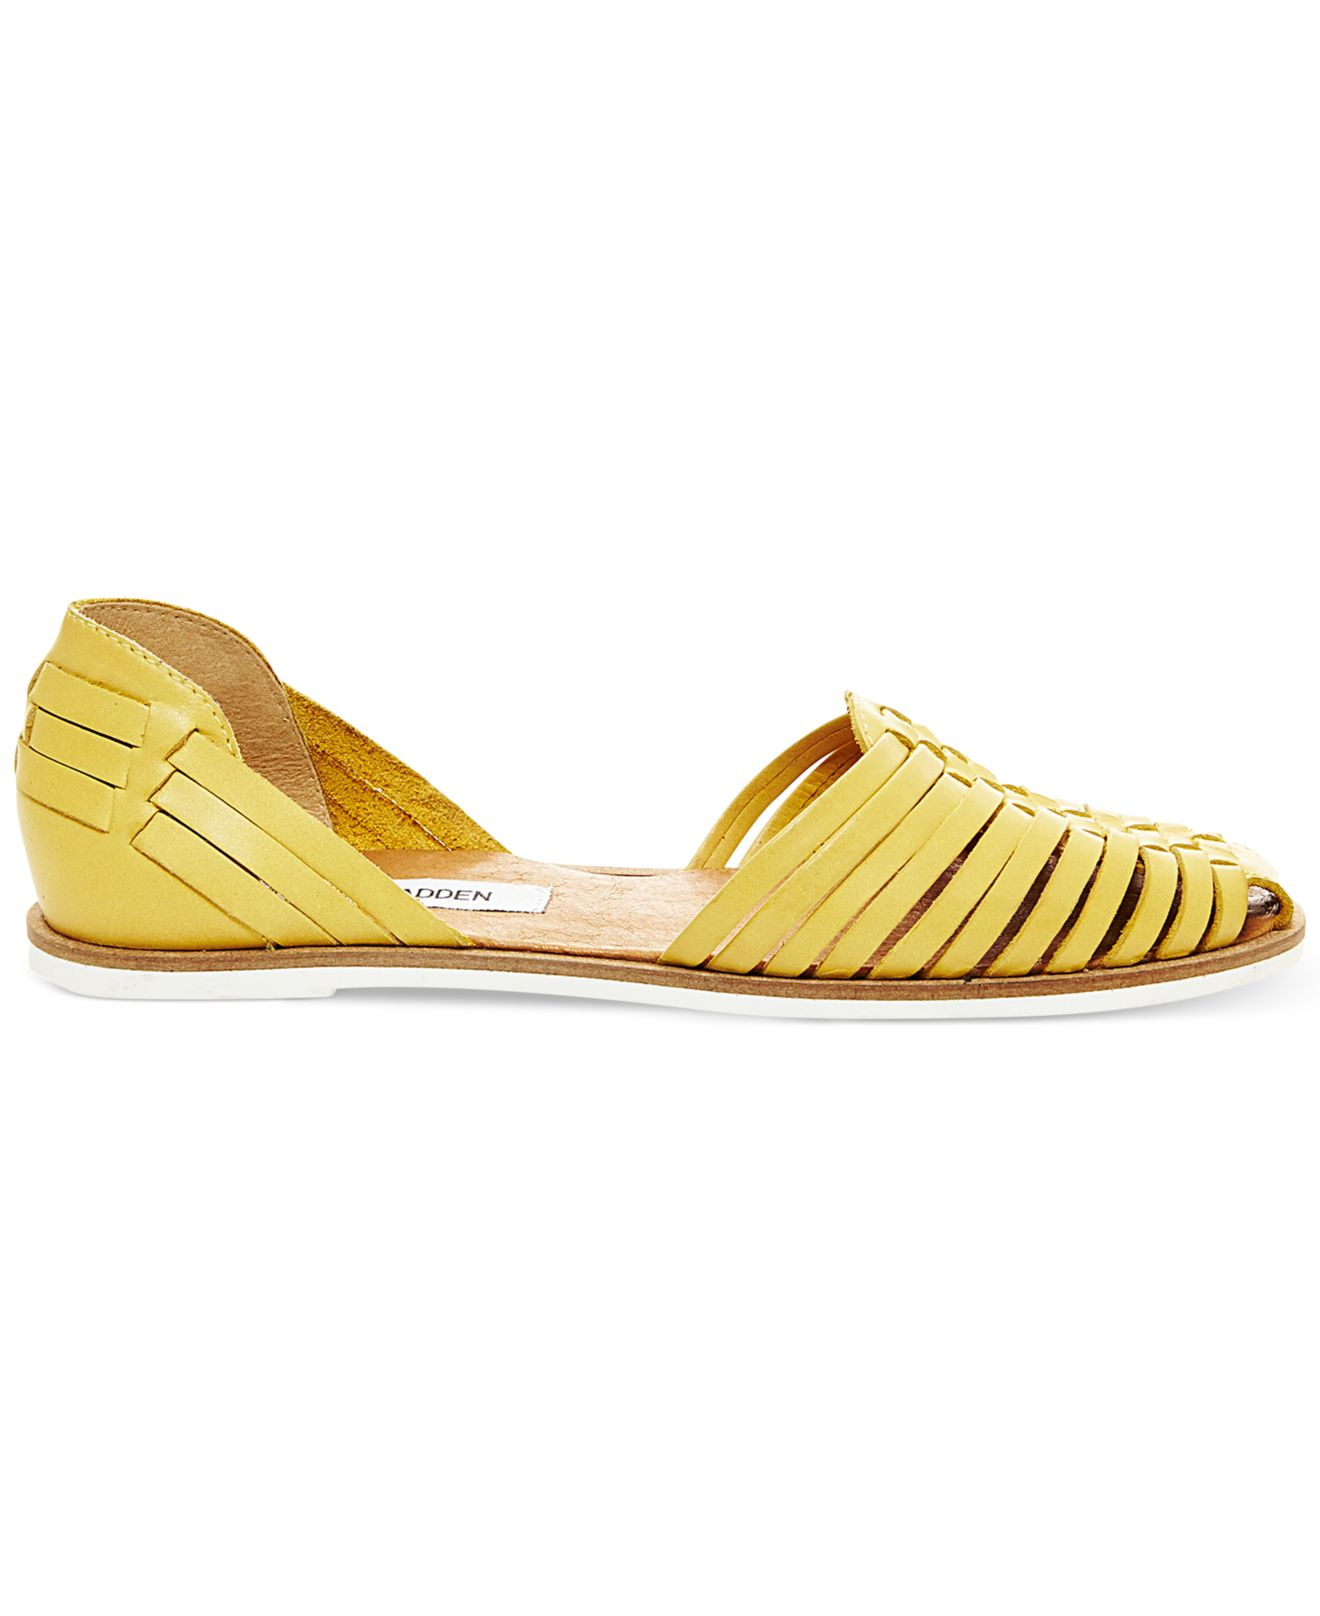 Steve madden Women's Hillarie Huarache Slip-on Sandals in Yellow | Lyst